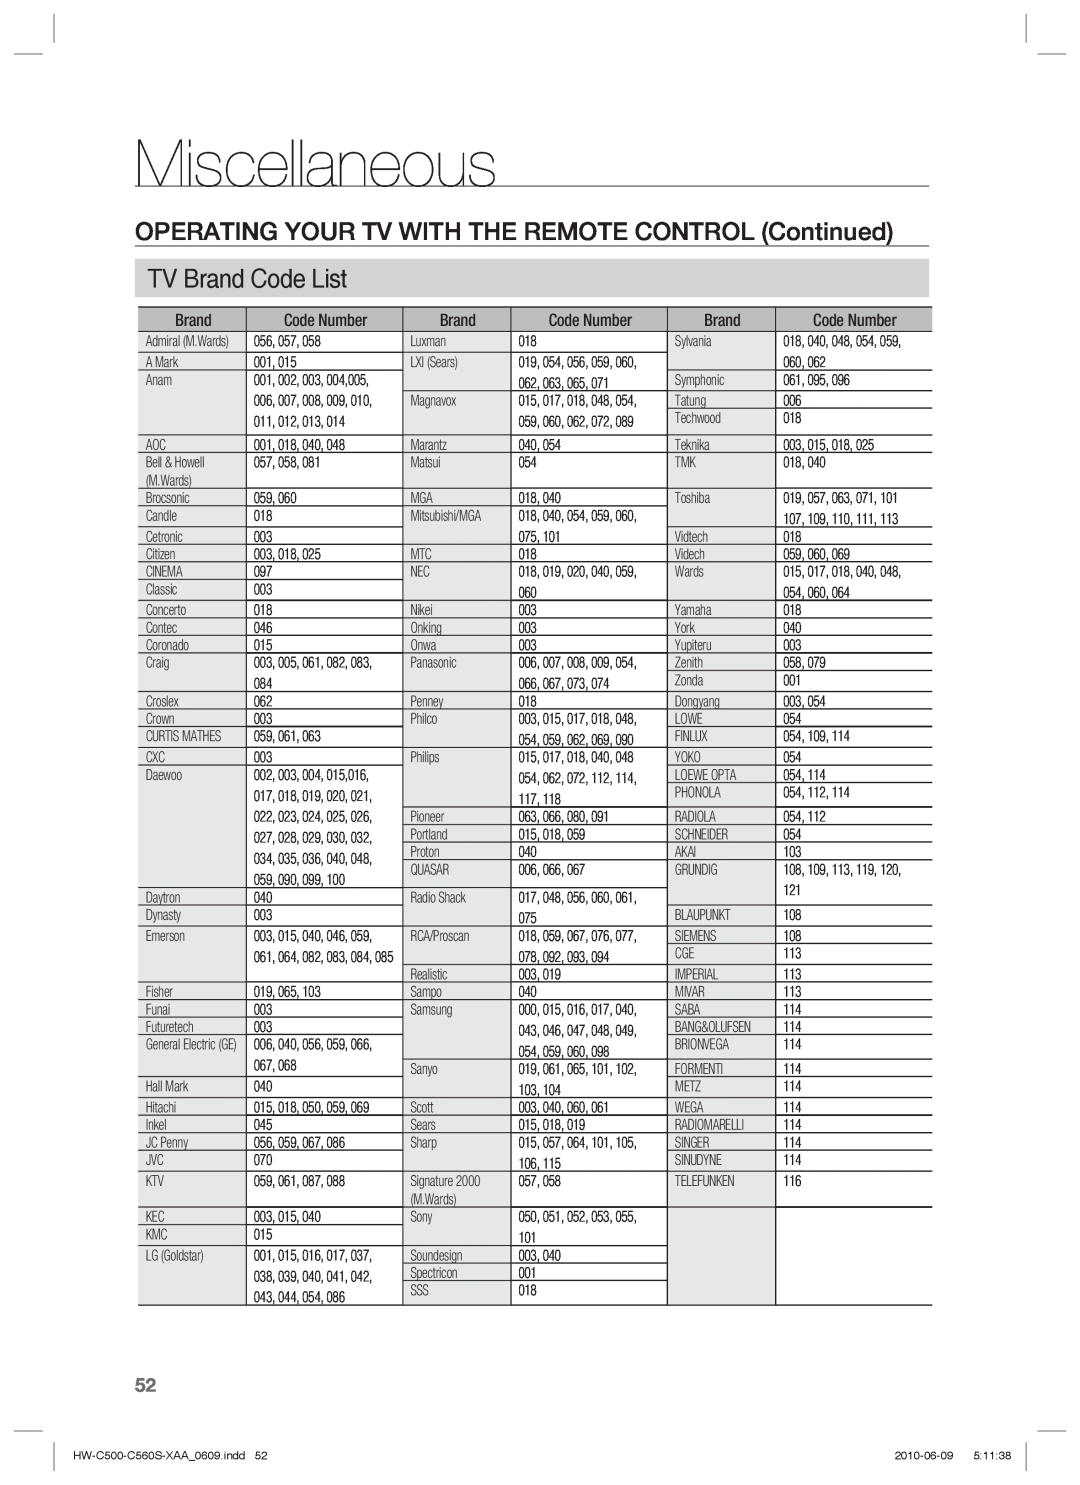 Samsung HW-C500, HW-C560S user manual TV Brand Code List, Miscellaneous, Code Number 